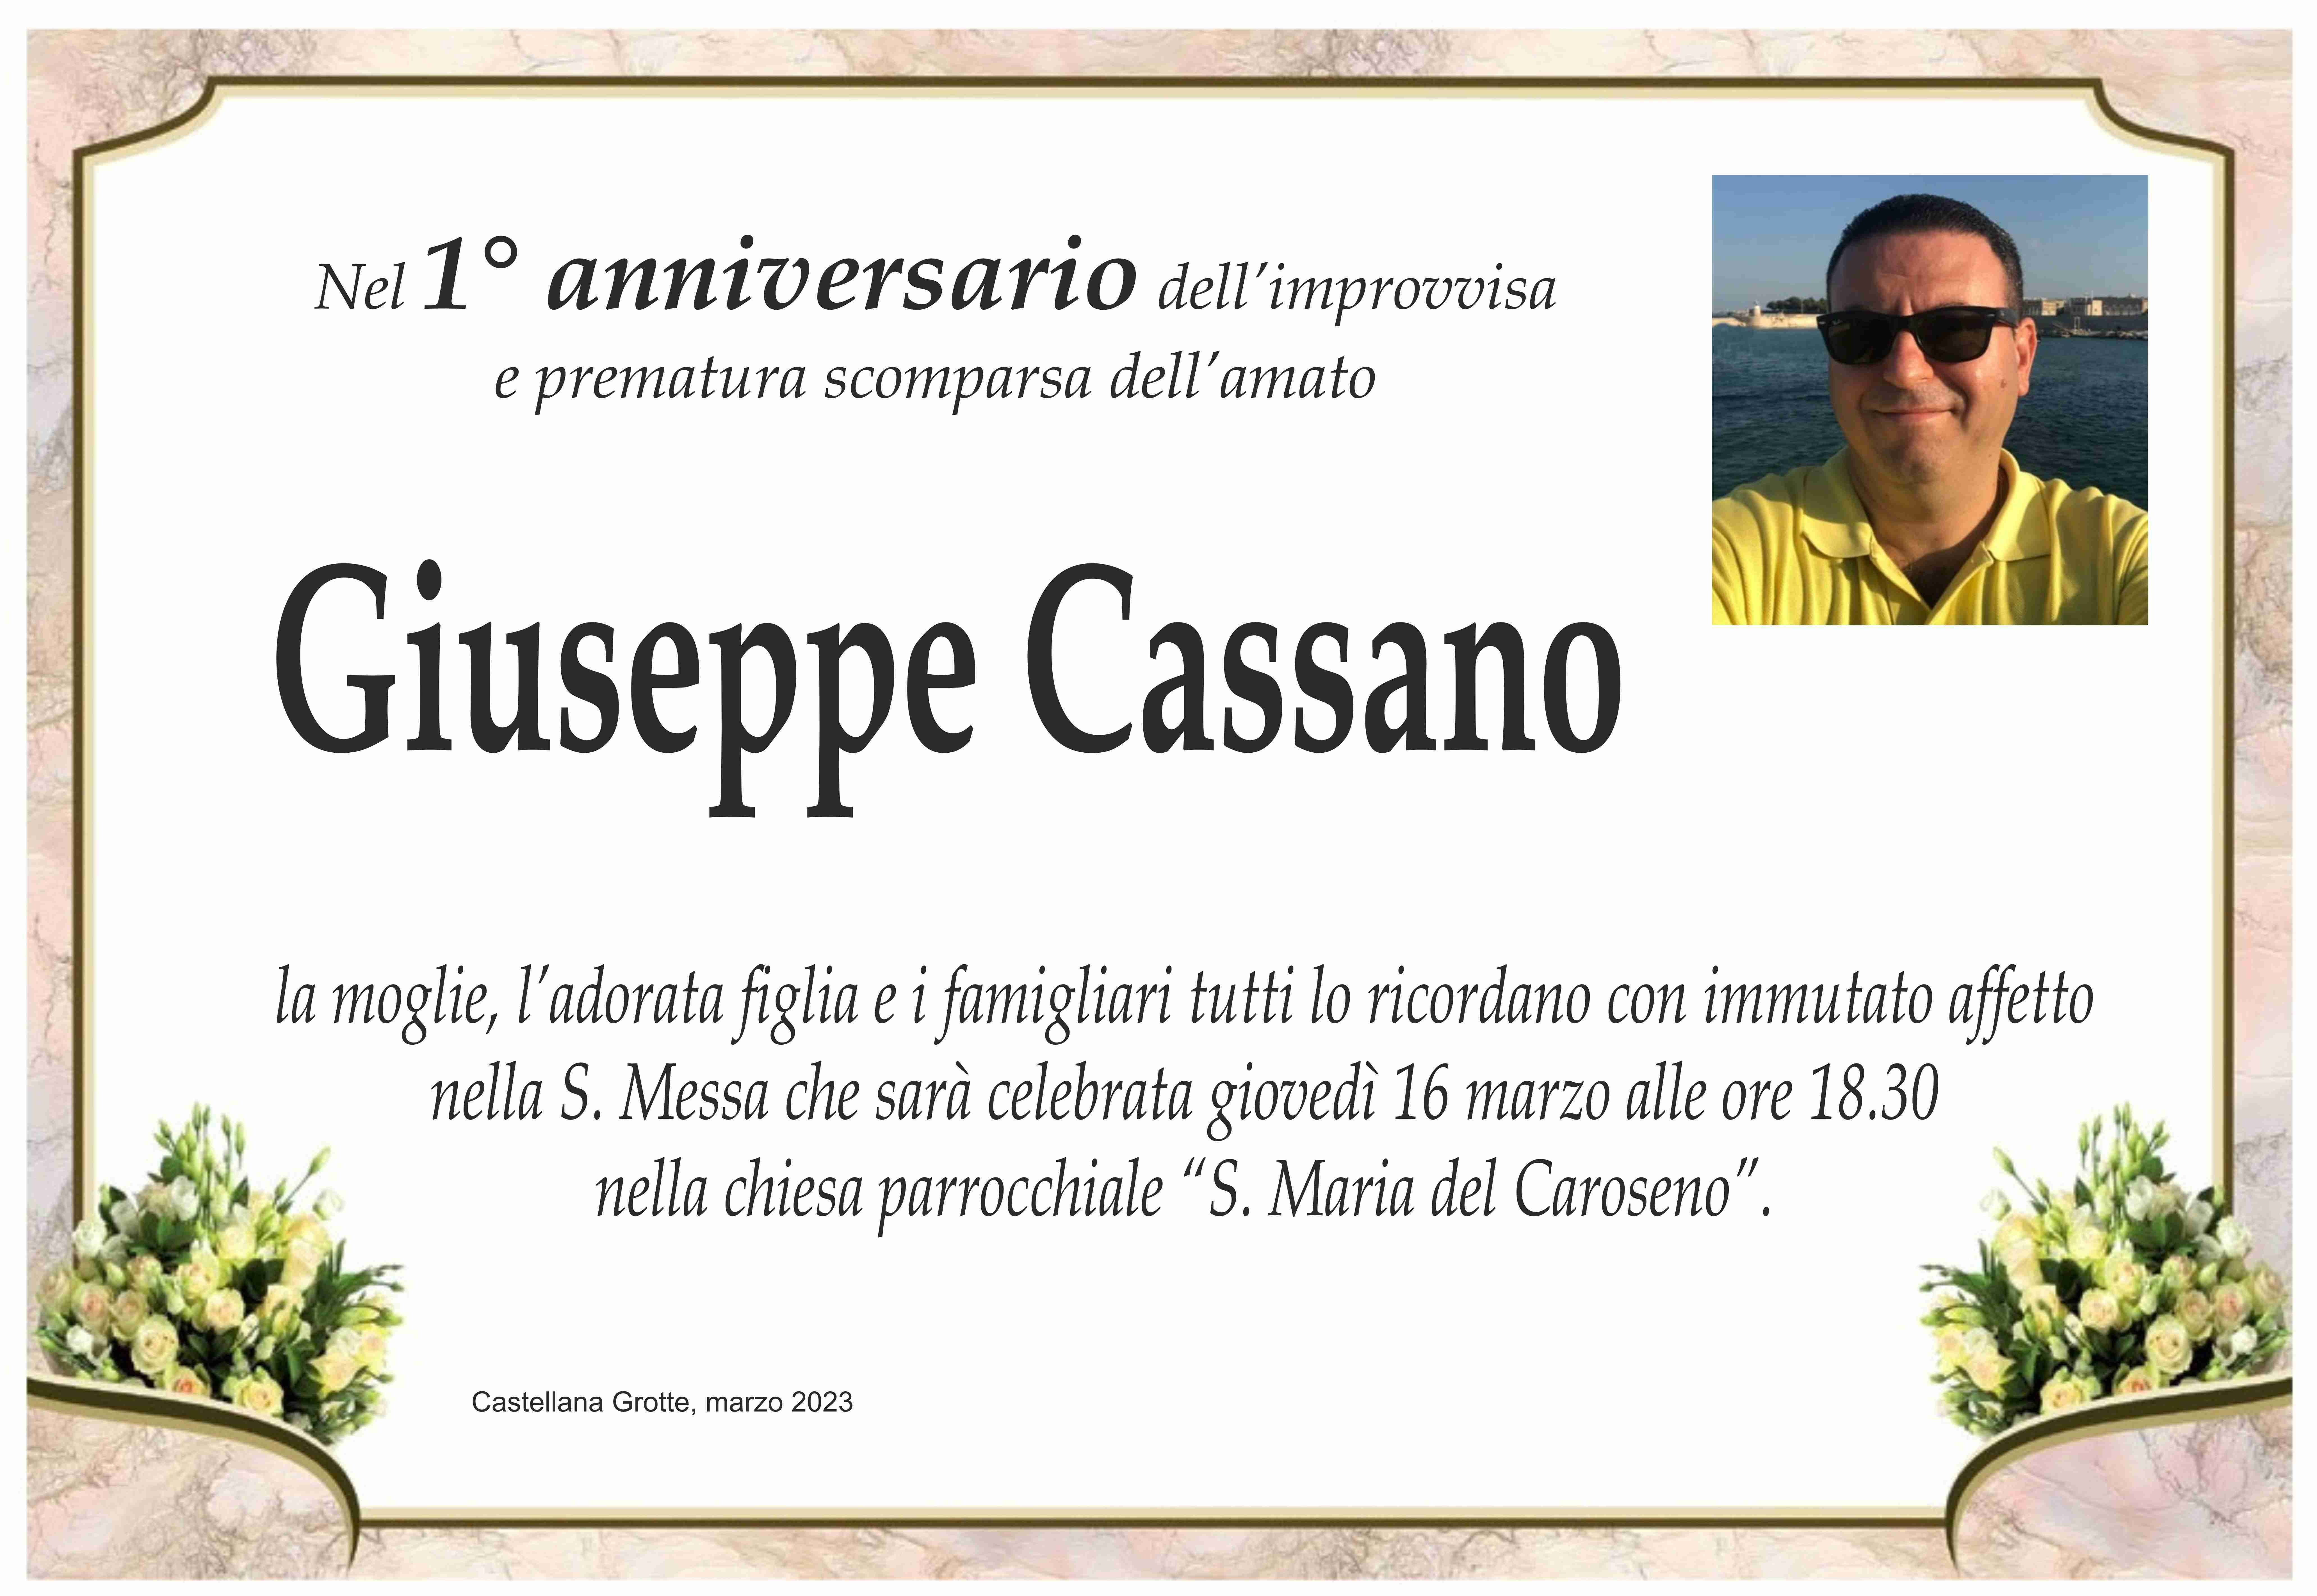 Giuseppe Cassano